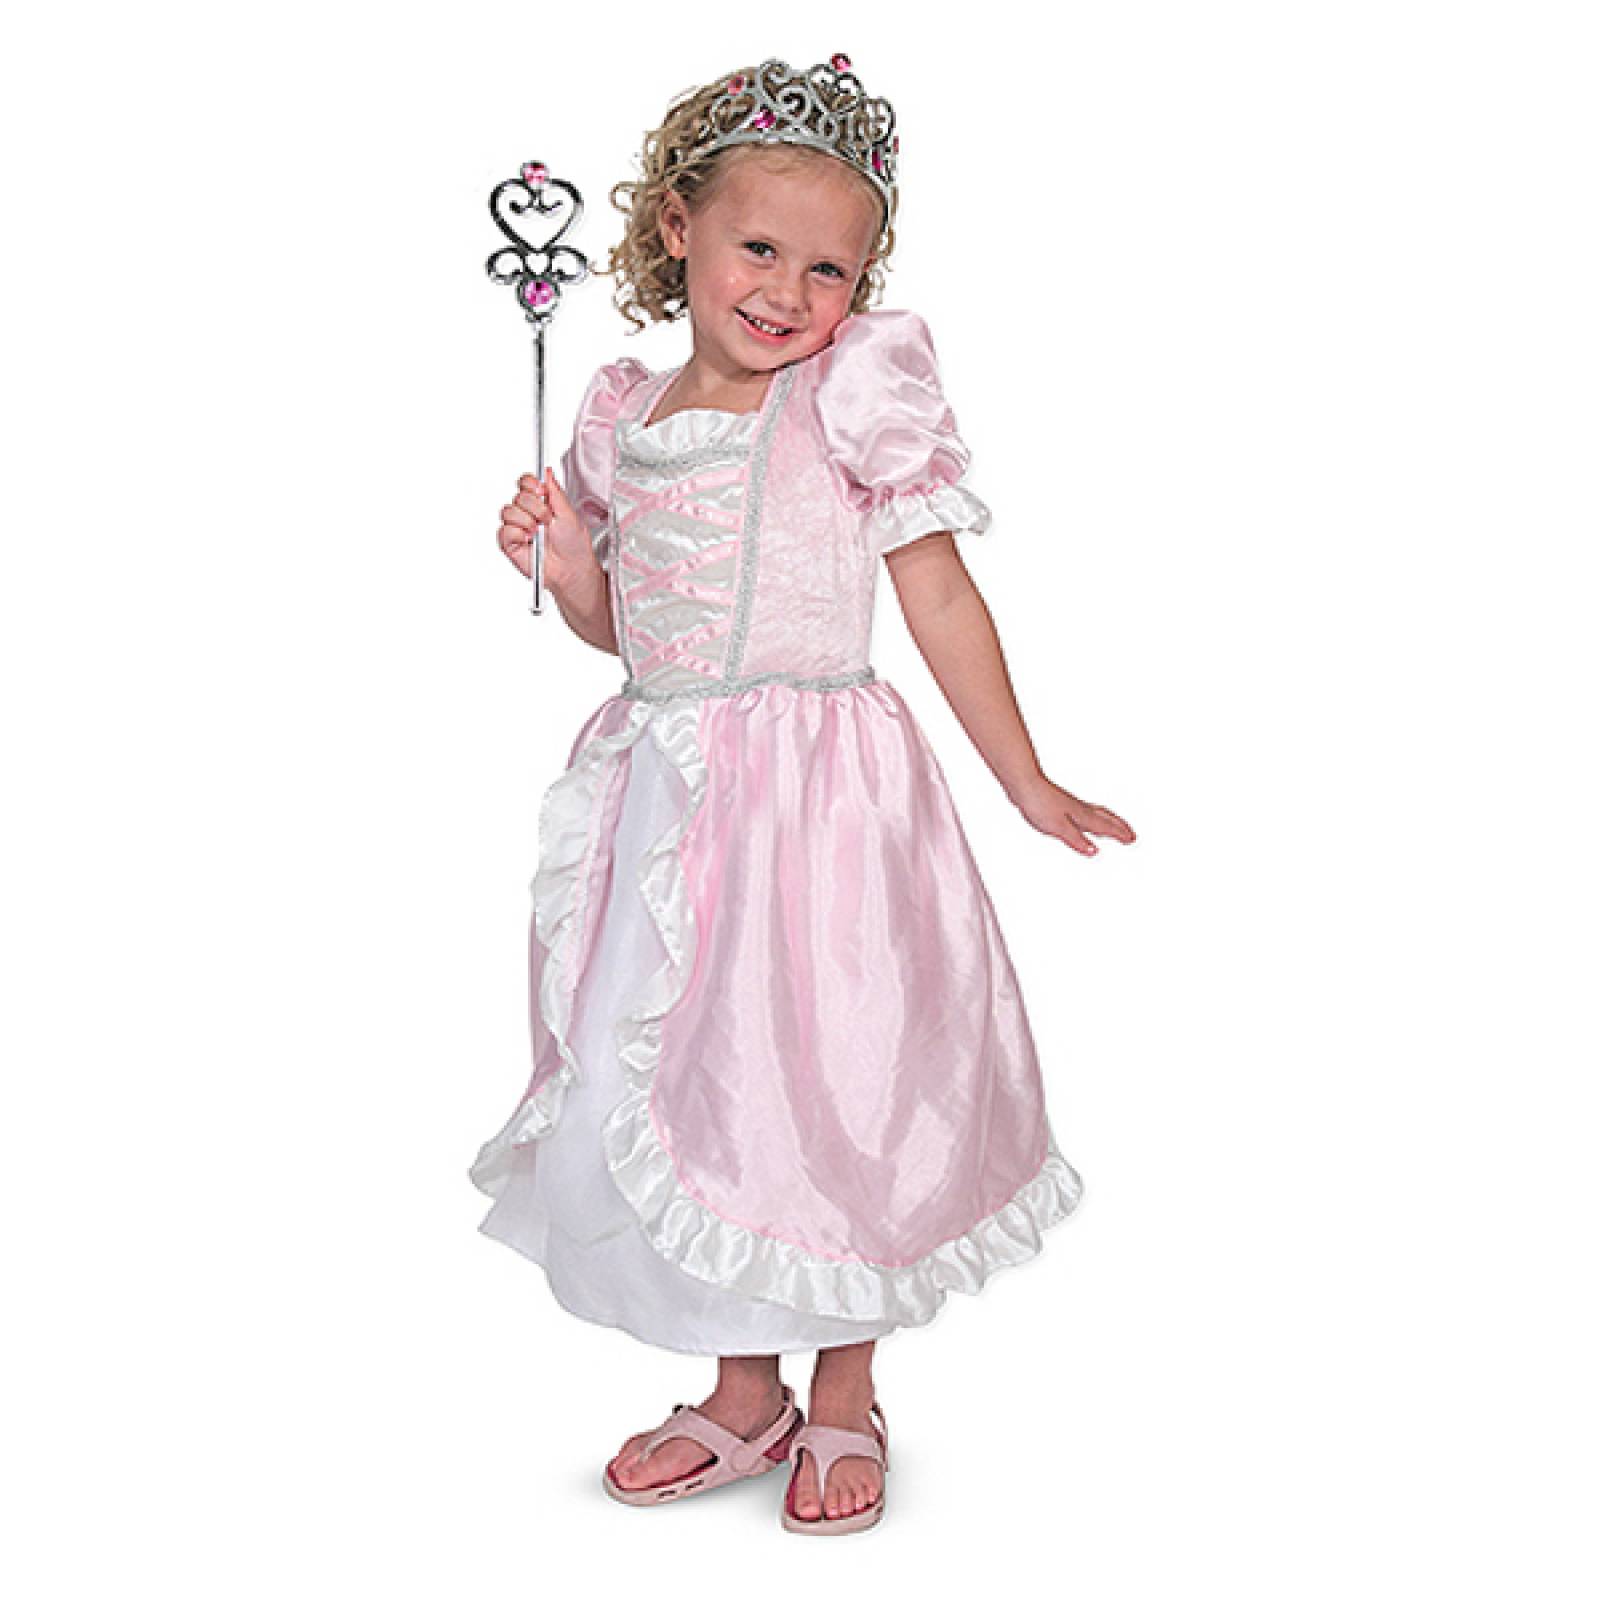 Fancy Dress Role Play Costume Set - Princess thumbnails